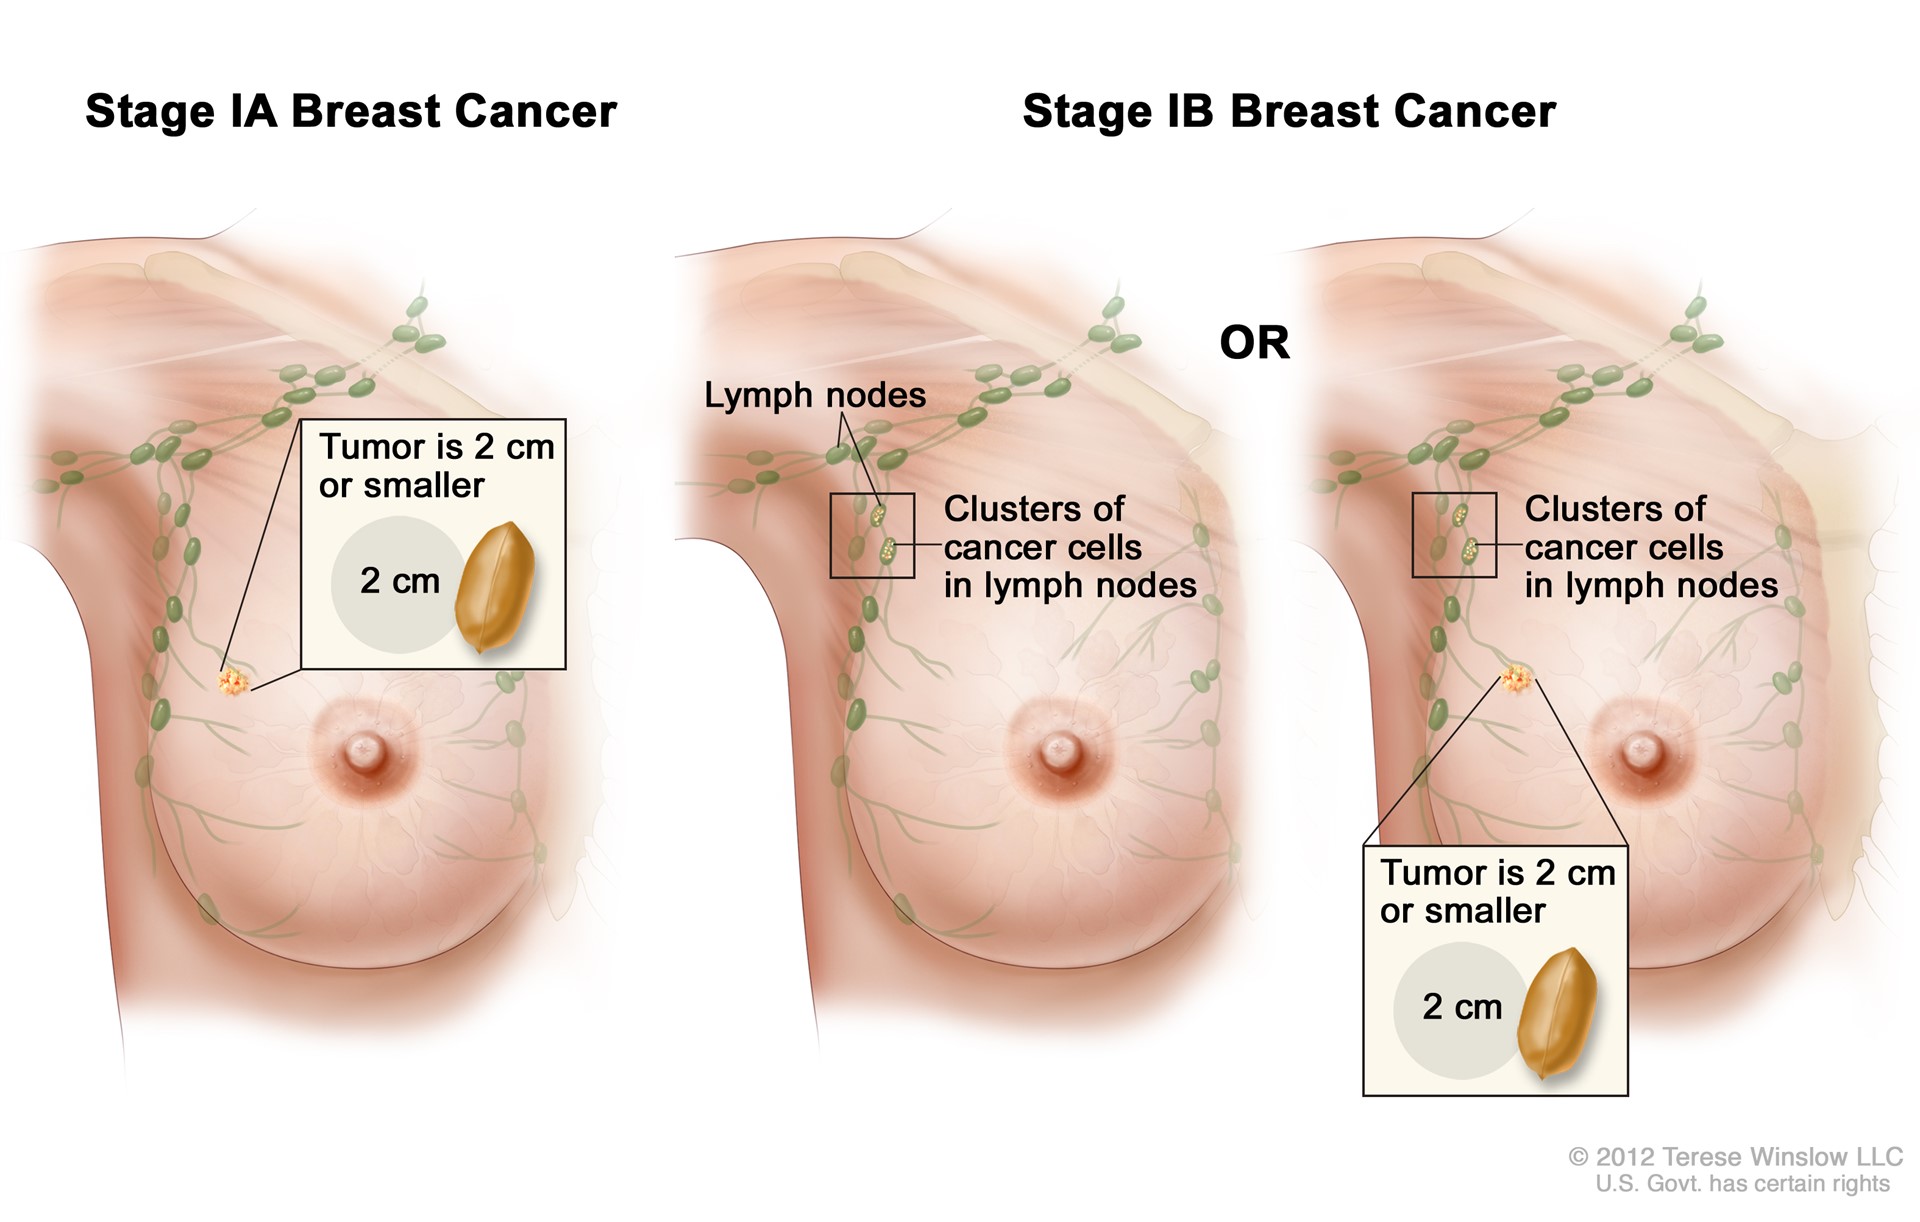 https://www.facs.org/media/zqvhdfgx/breast_cancer_stage_ia_and_1b.jpg?rnd=132950689626330000